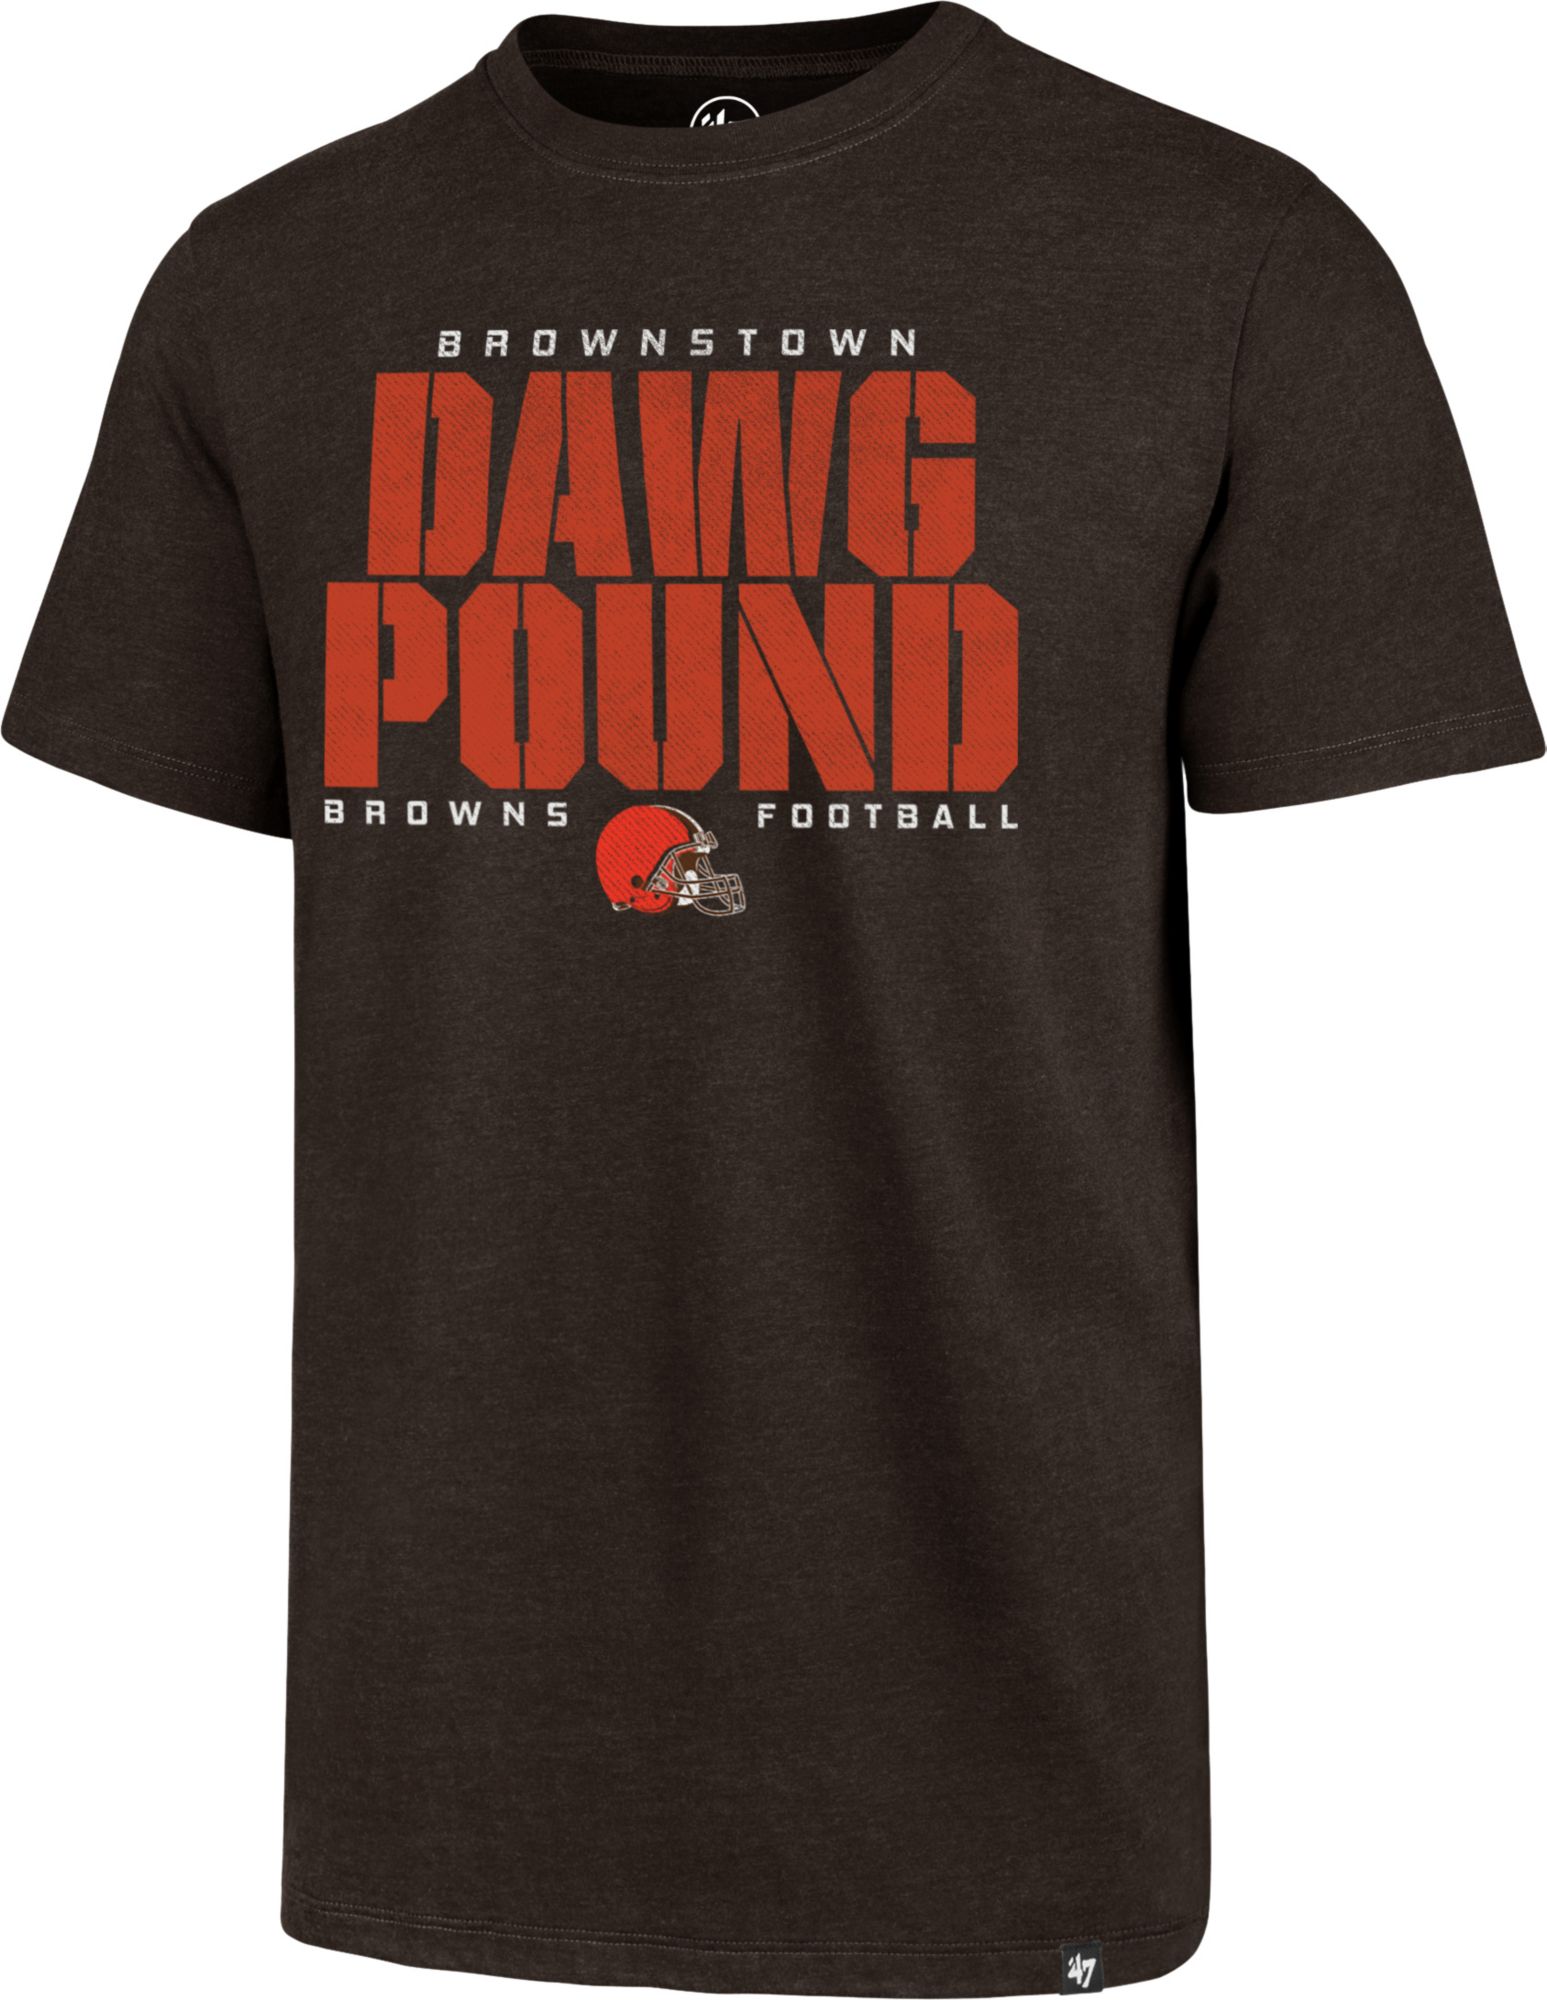 Cleveland Browns Dawg Pound Club Brown 